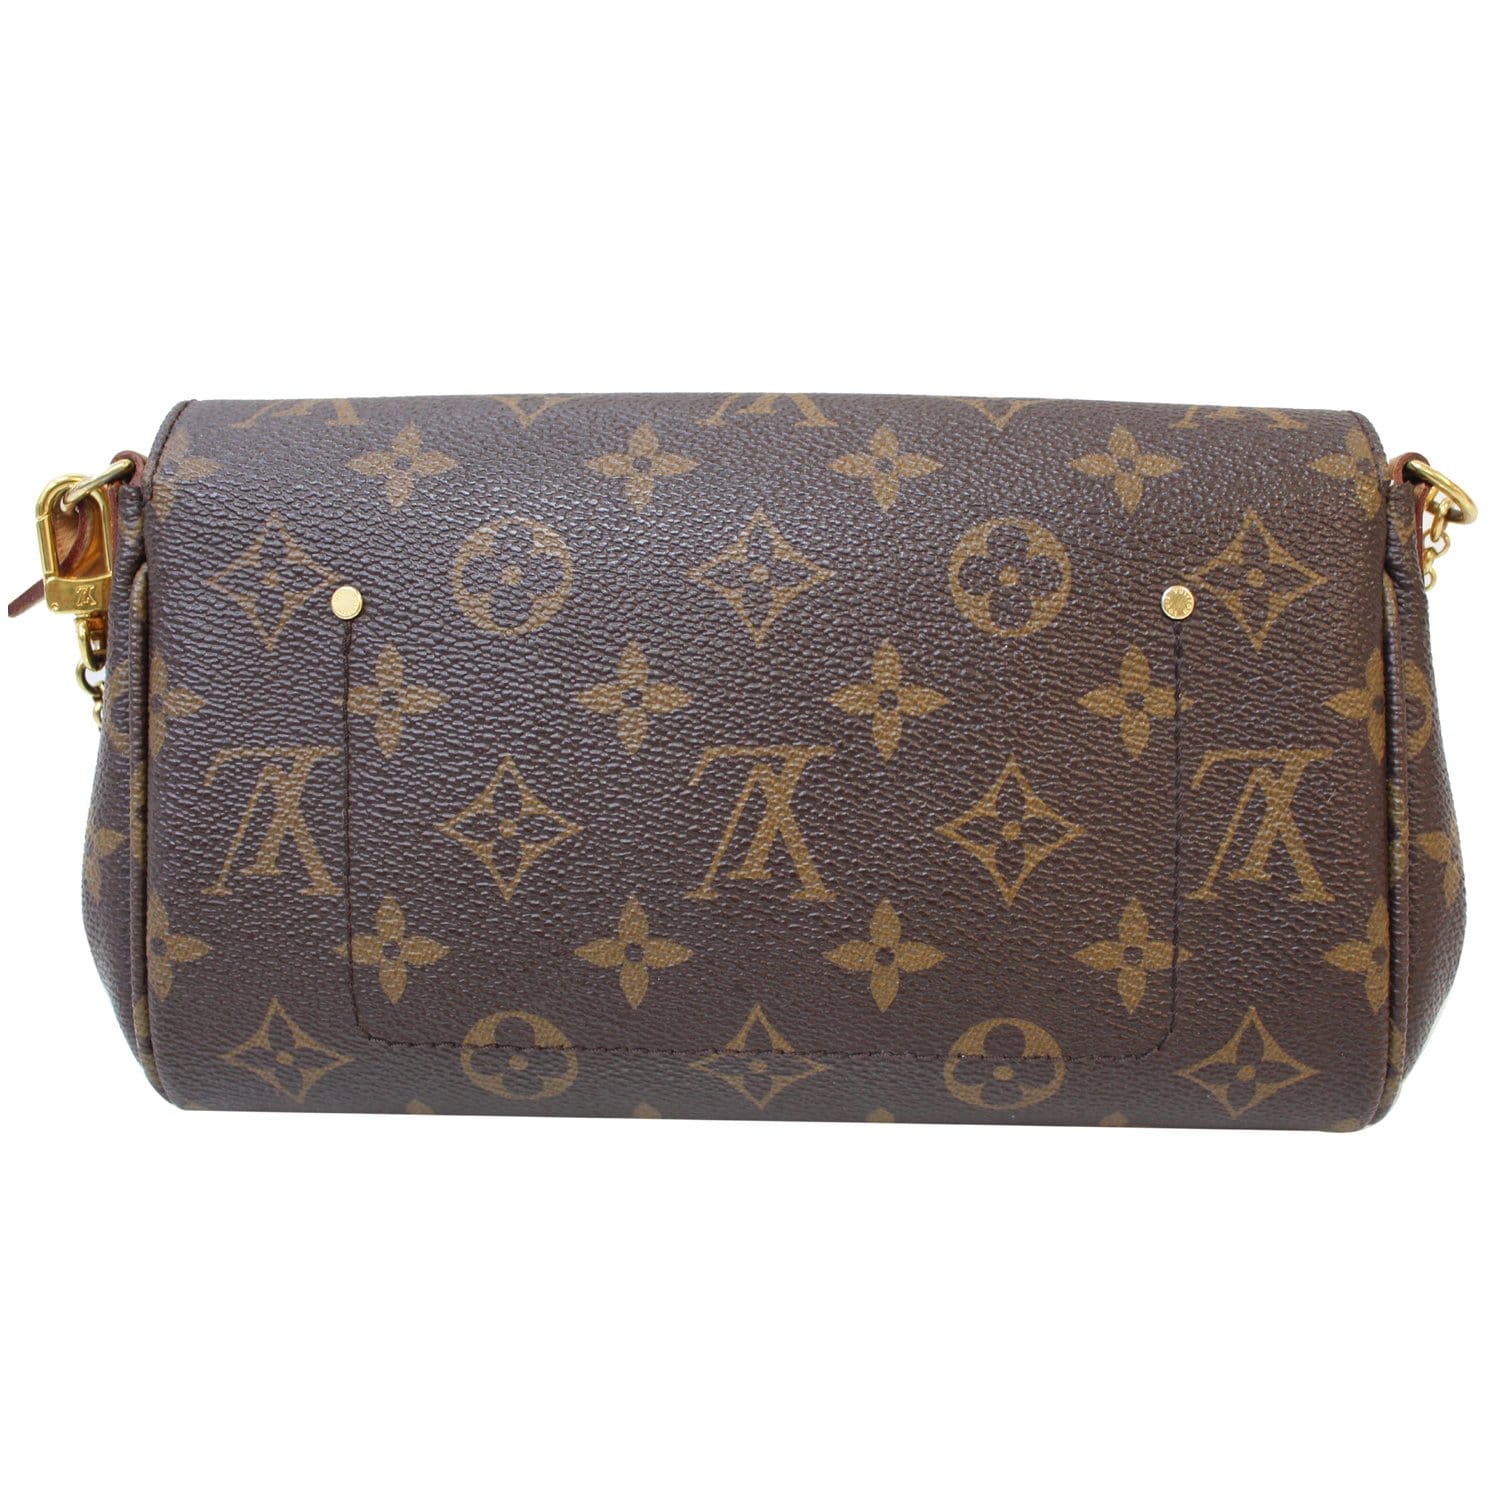 Louis Vuitton Monogram Canvas Handbag